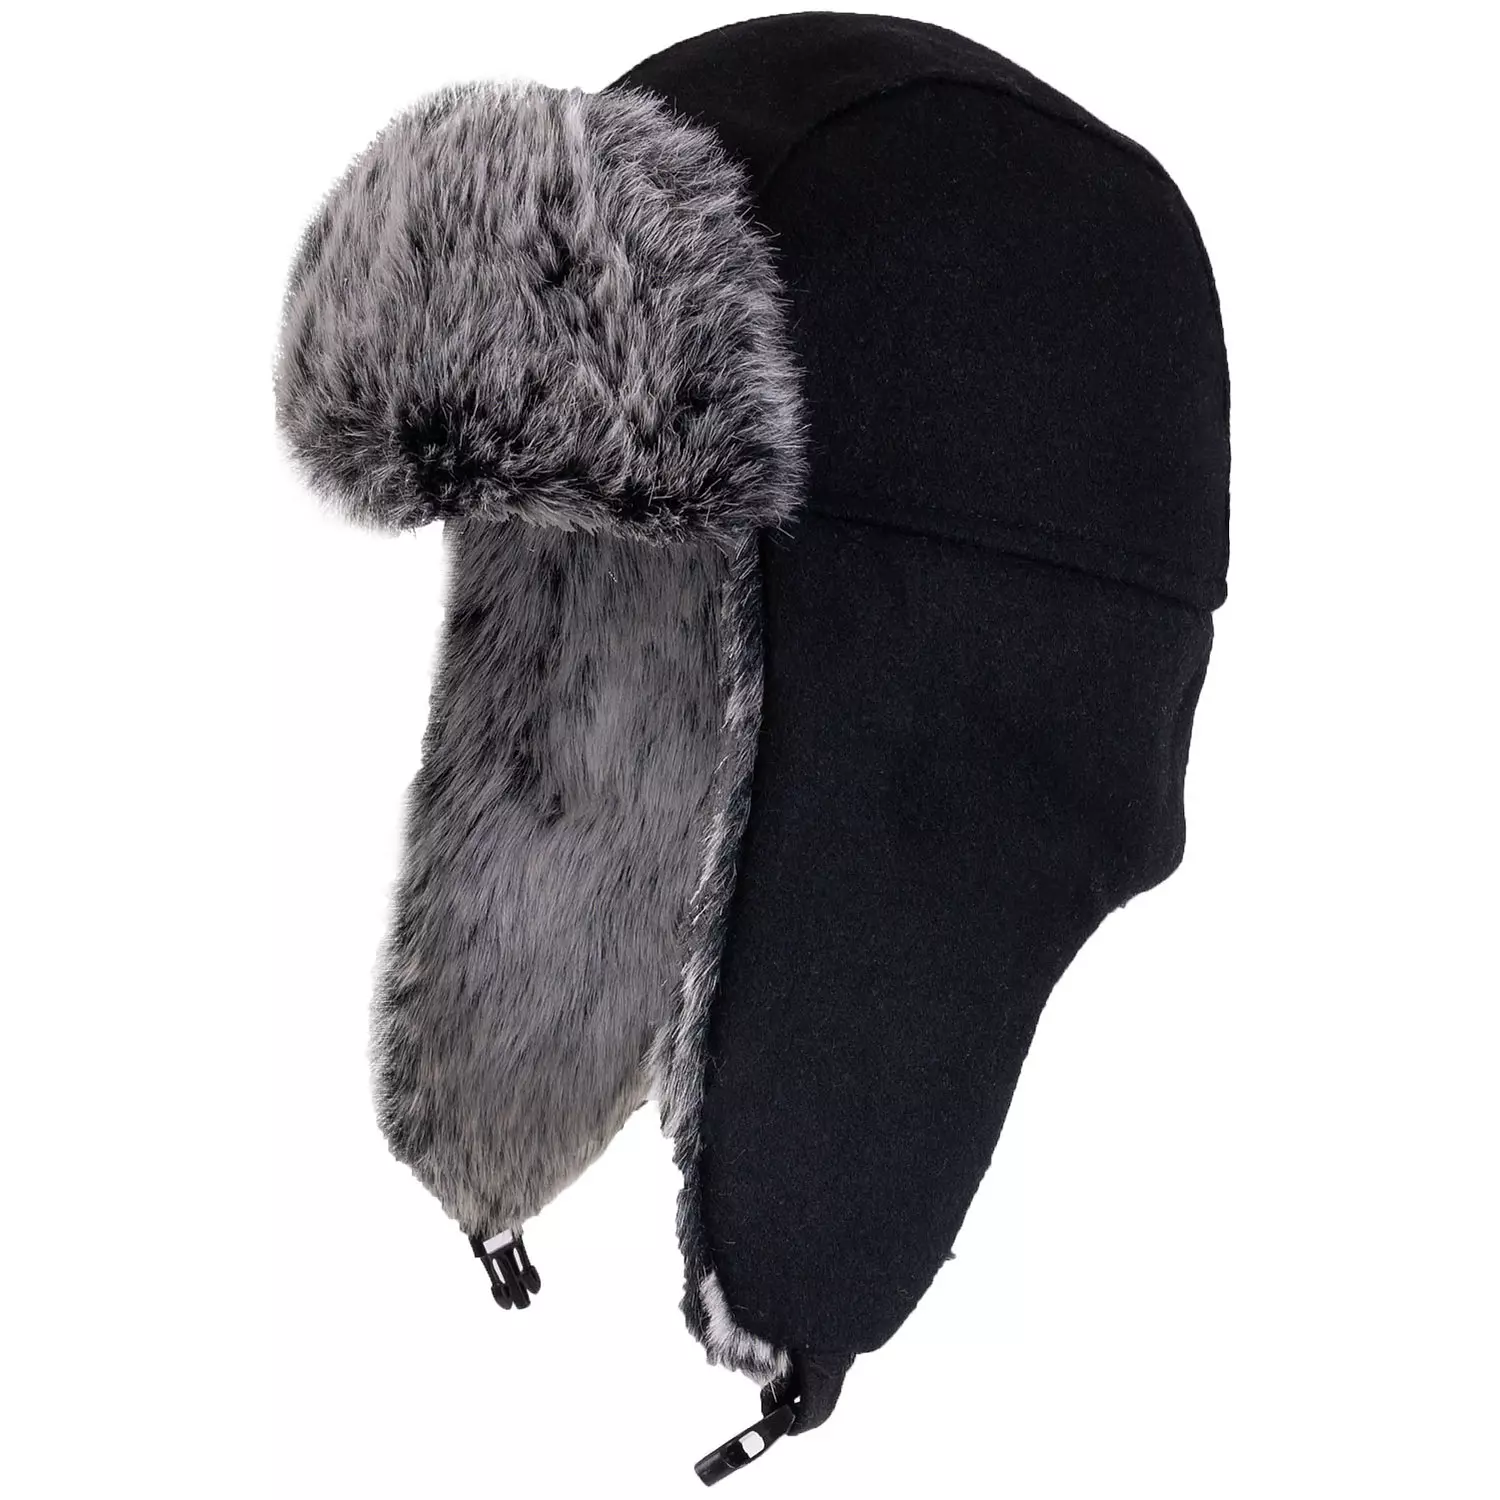 Fleece aviator hat with faux fur lining & trims, black